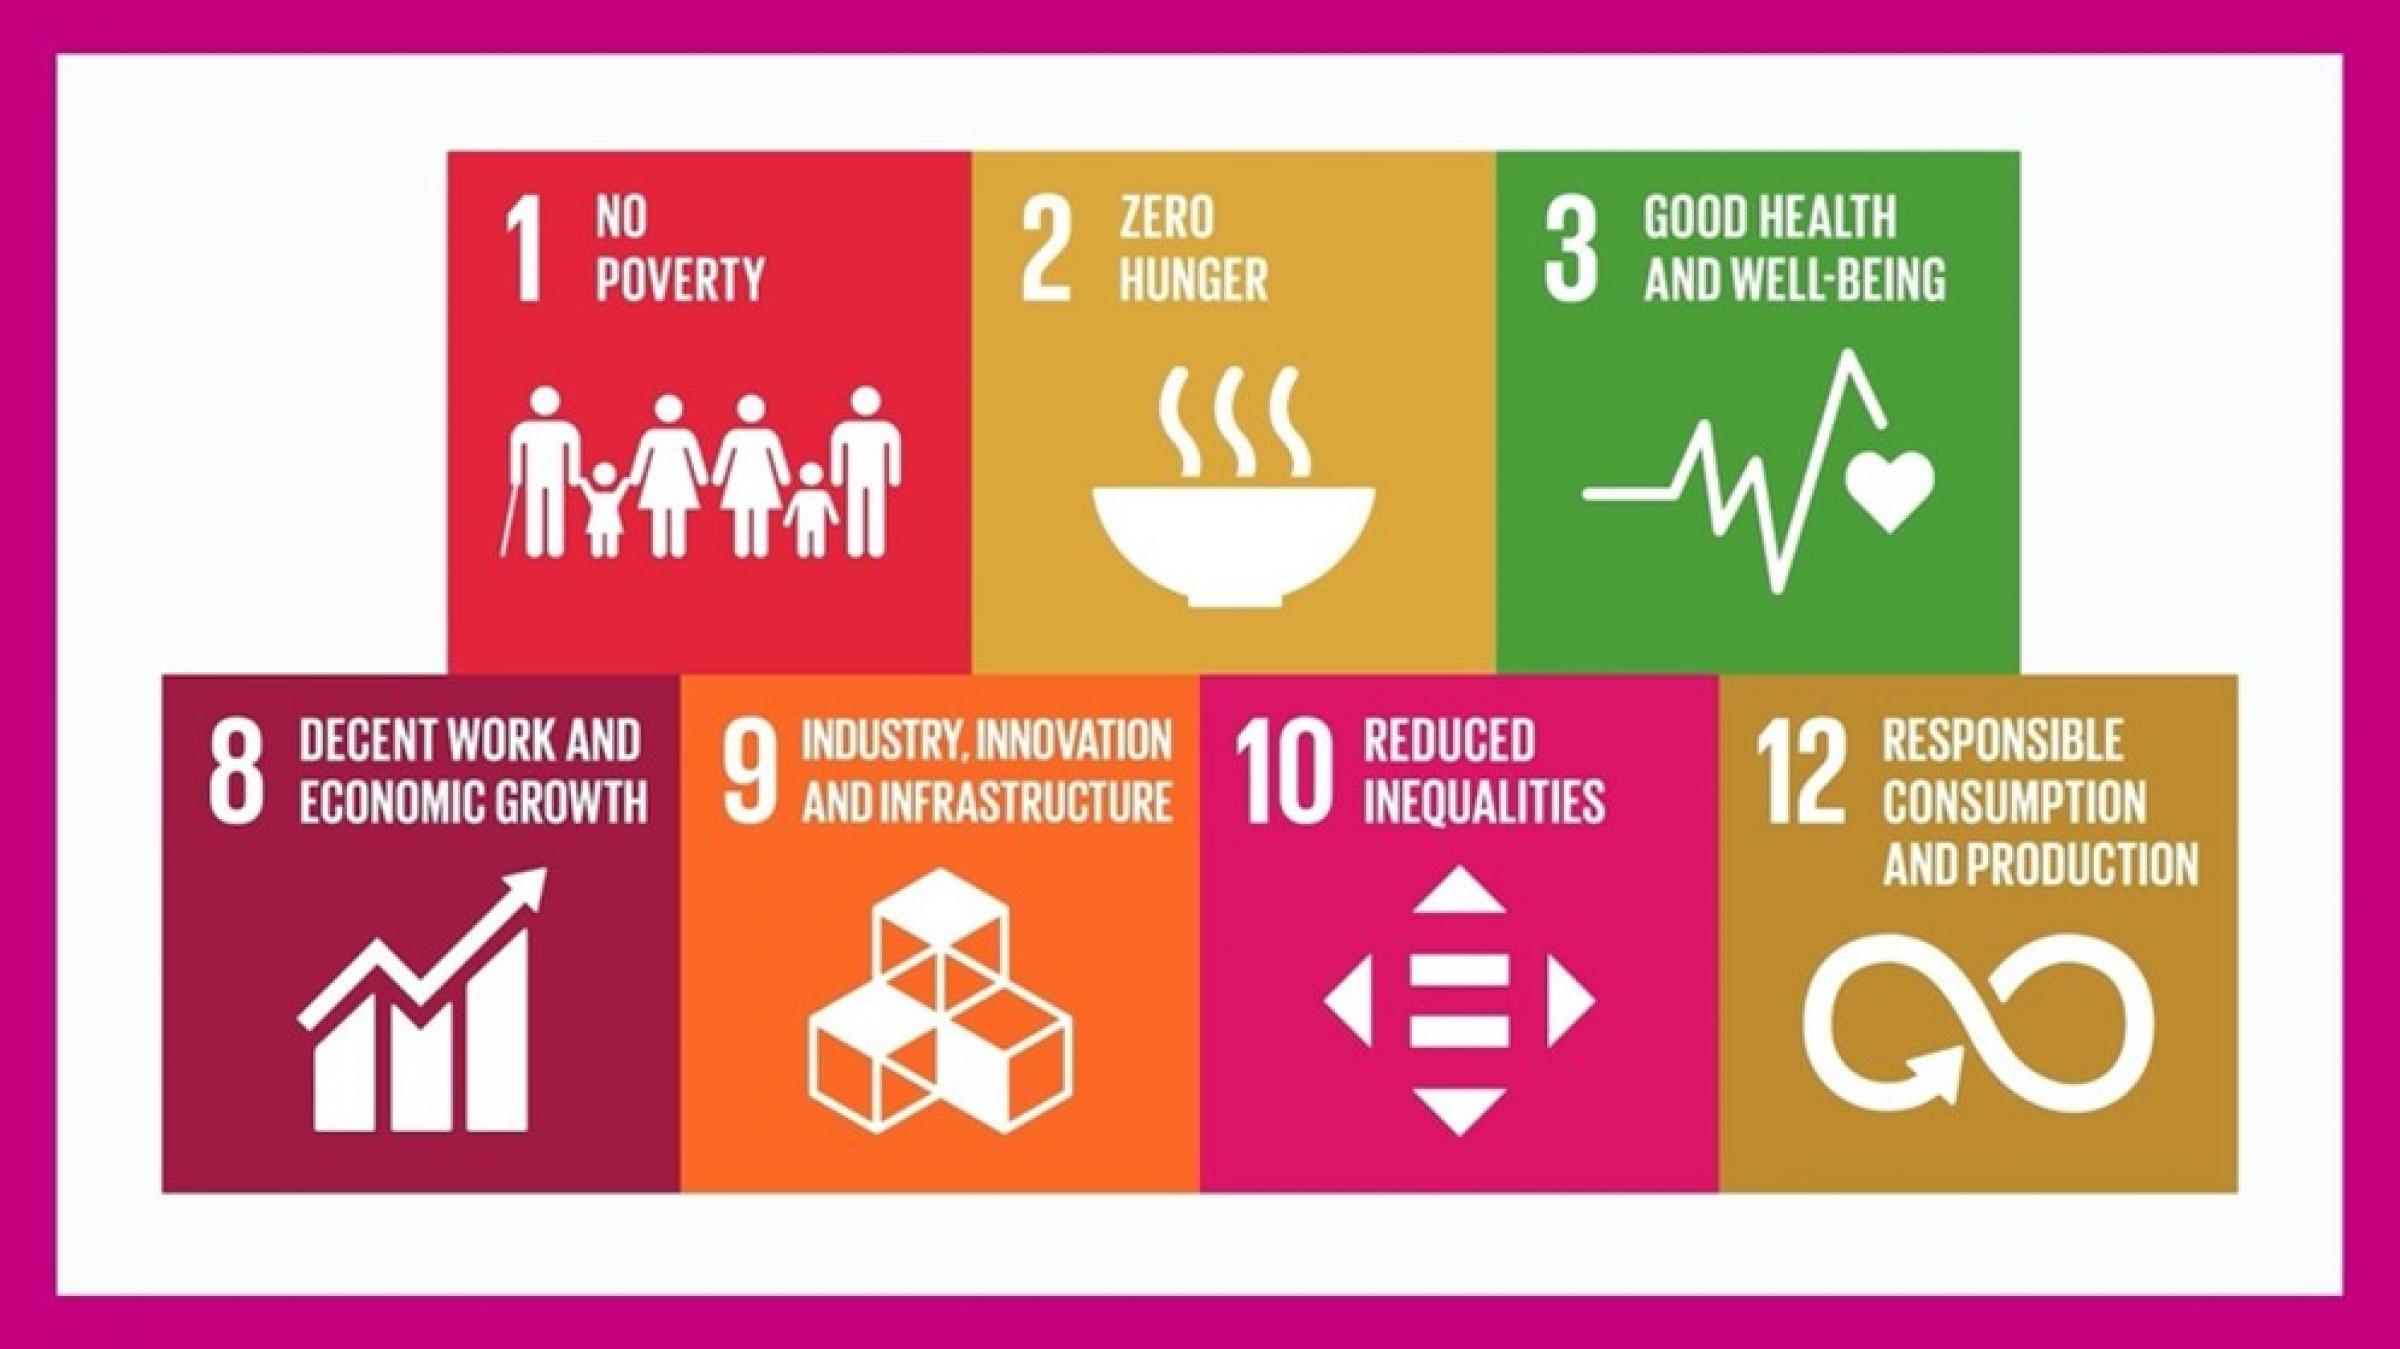 Related SDGs (Sustainable Development Goals)